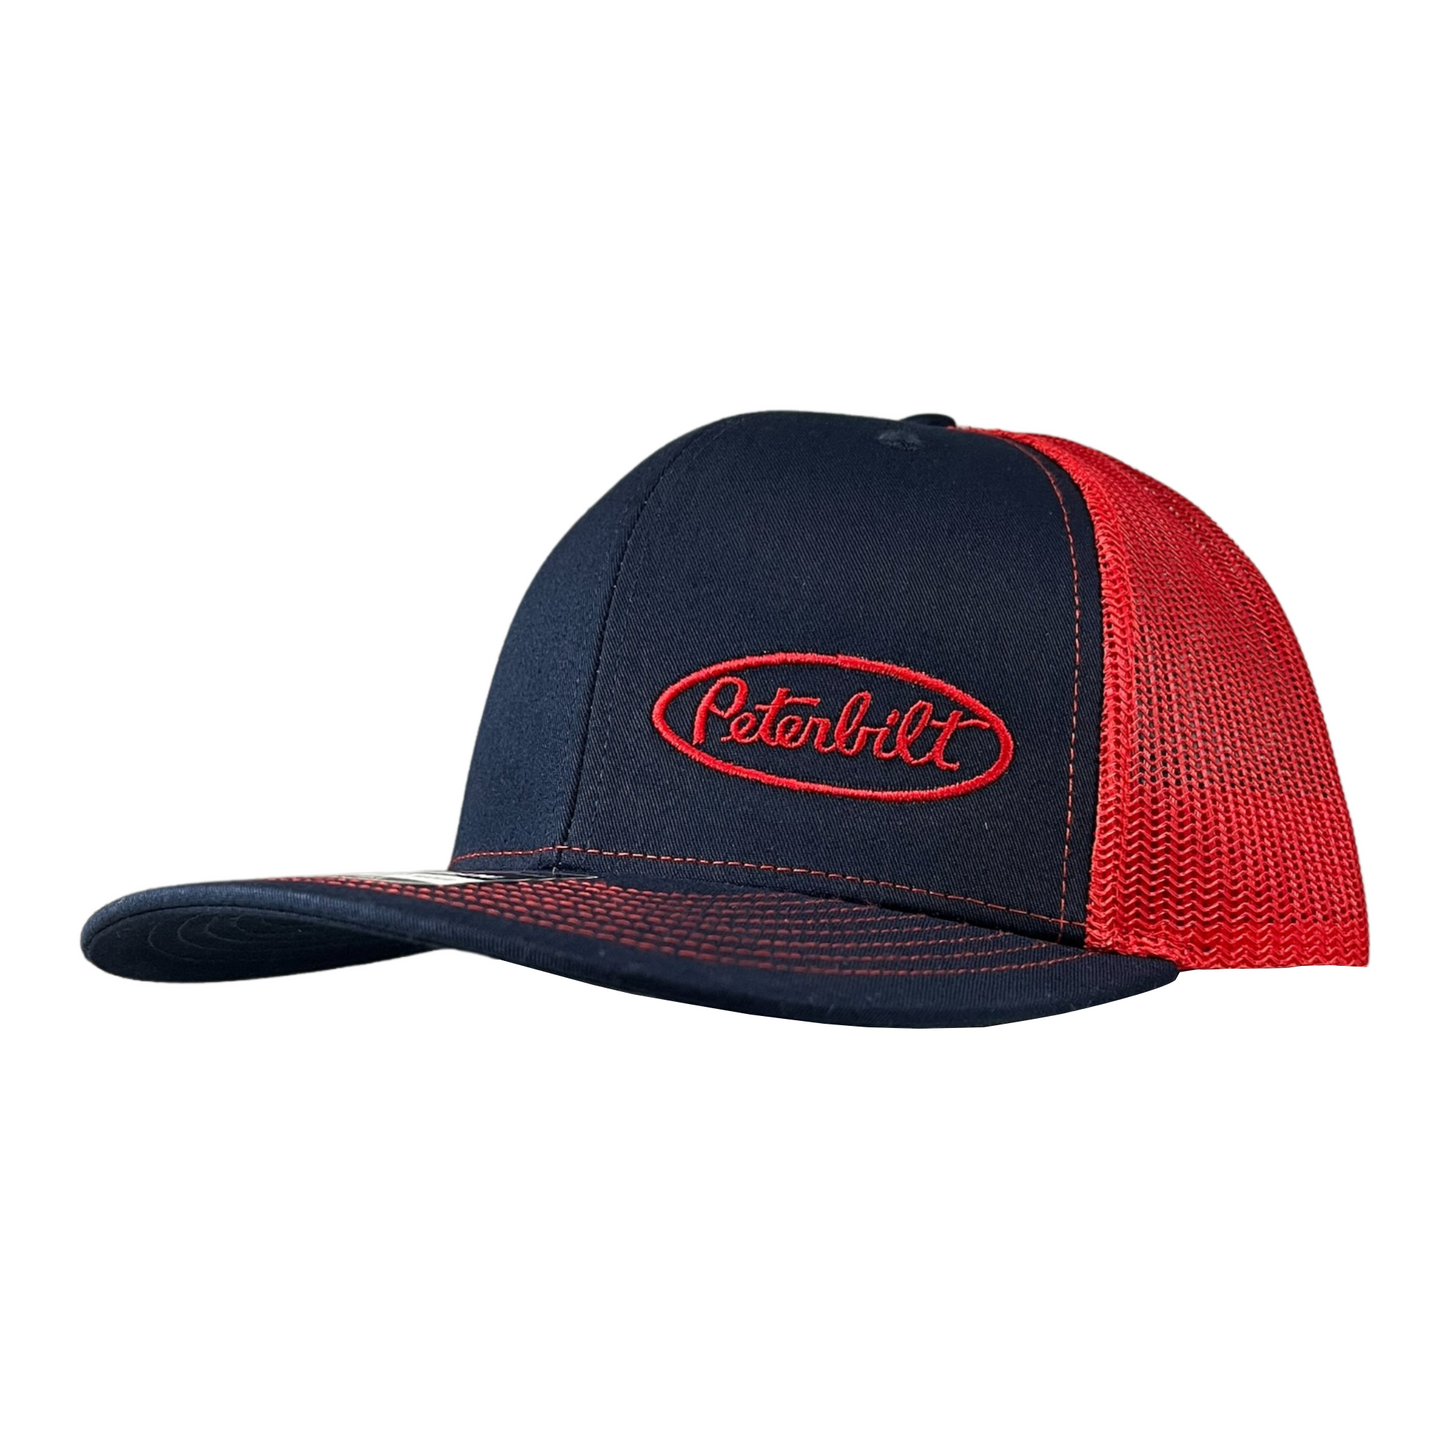 Classic Navy Blue and Red Peterbilt logo Trucker Cap